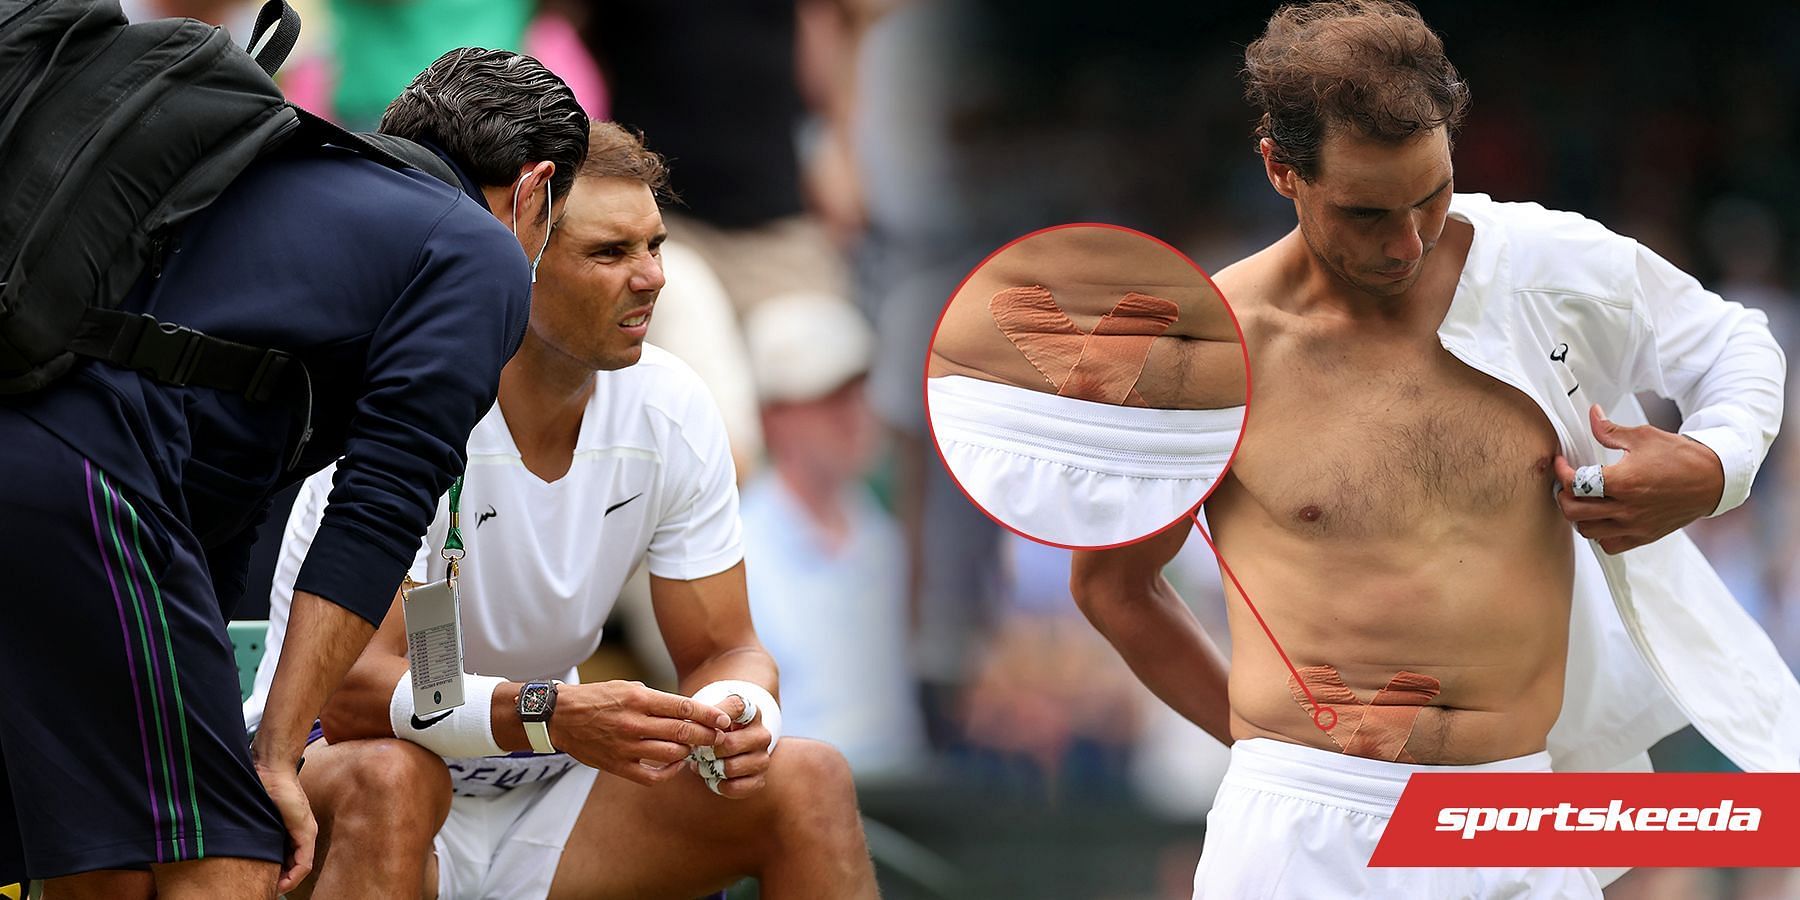 Rafael Nadal has withdrawn from Wimbledon due to an abdominal injury.